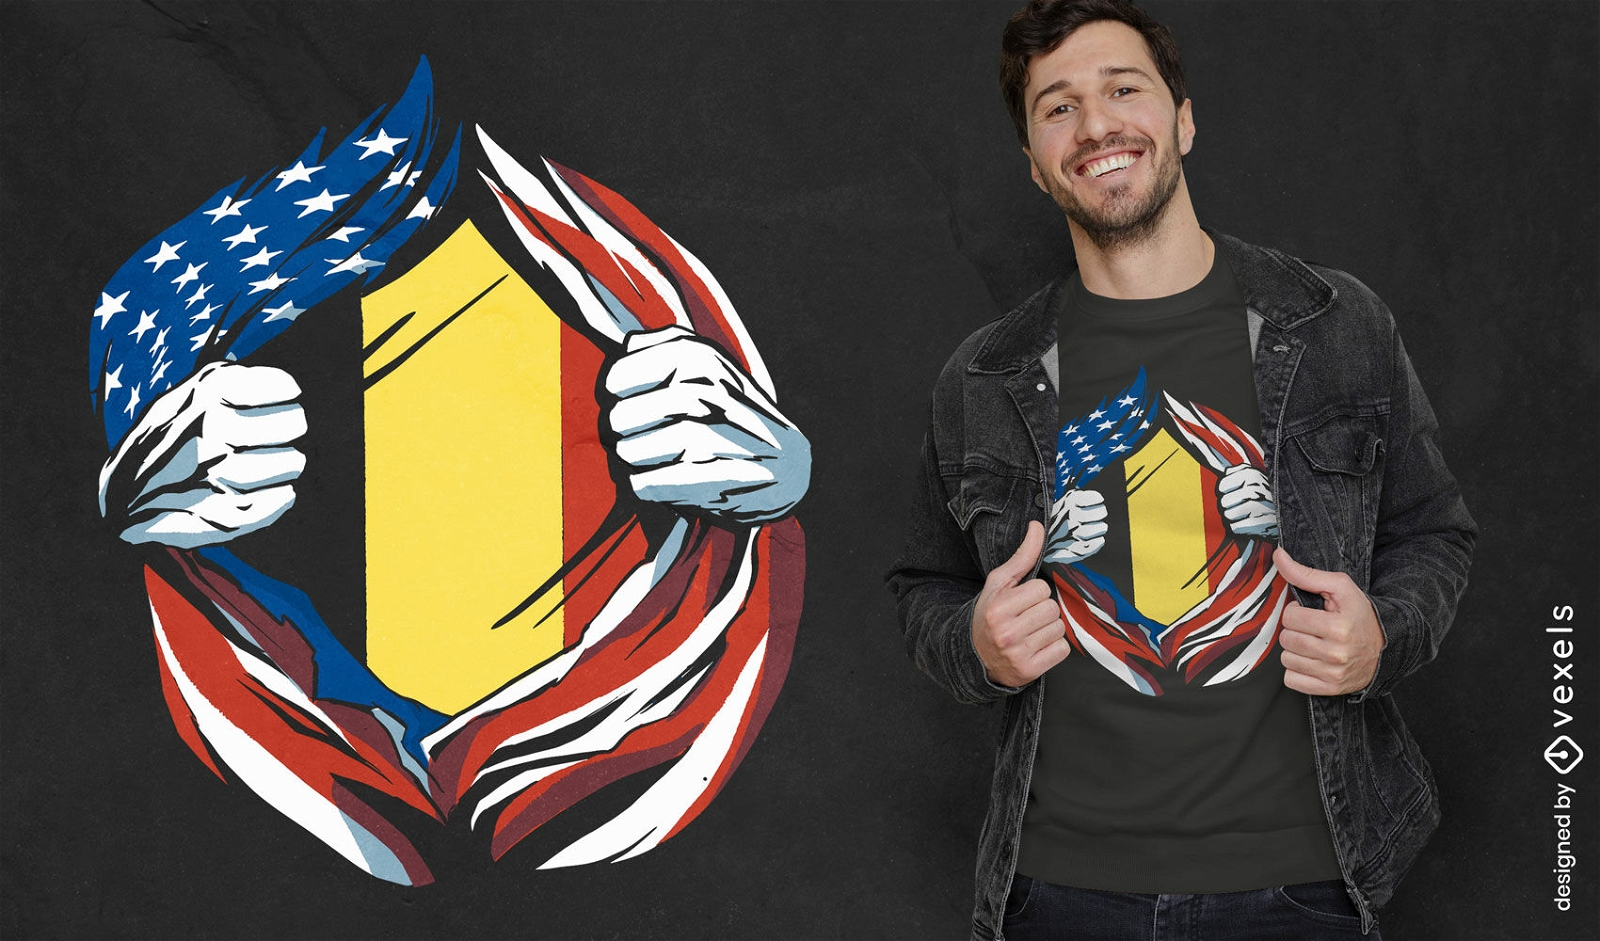 American and German flag t-shirt design